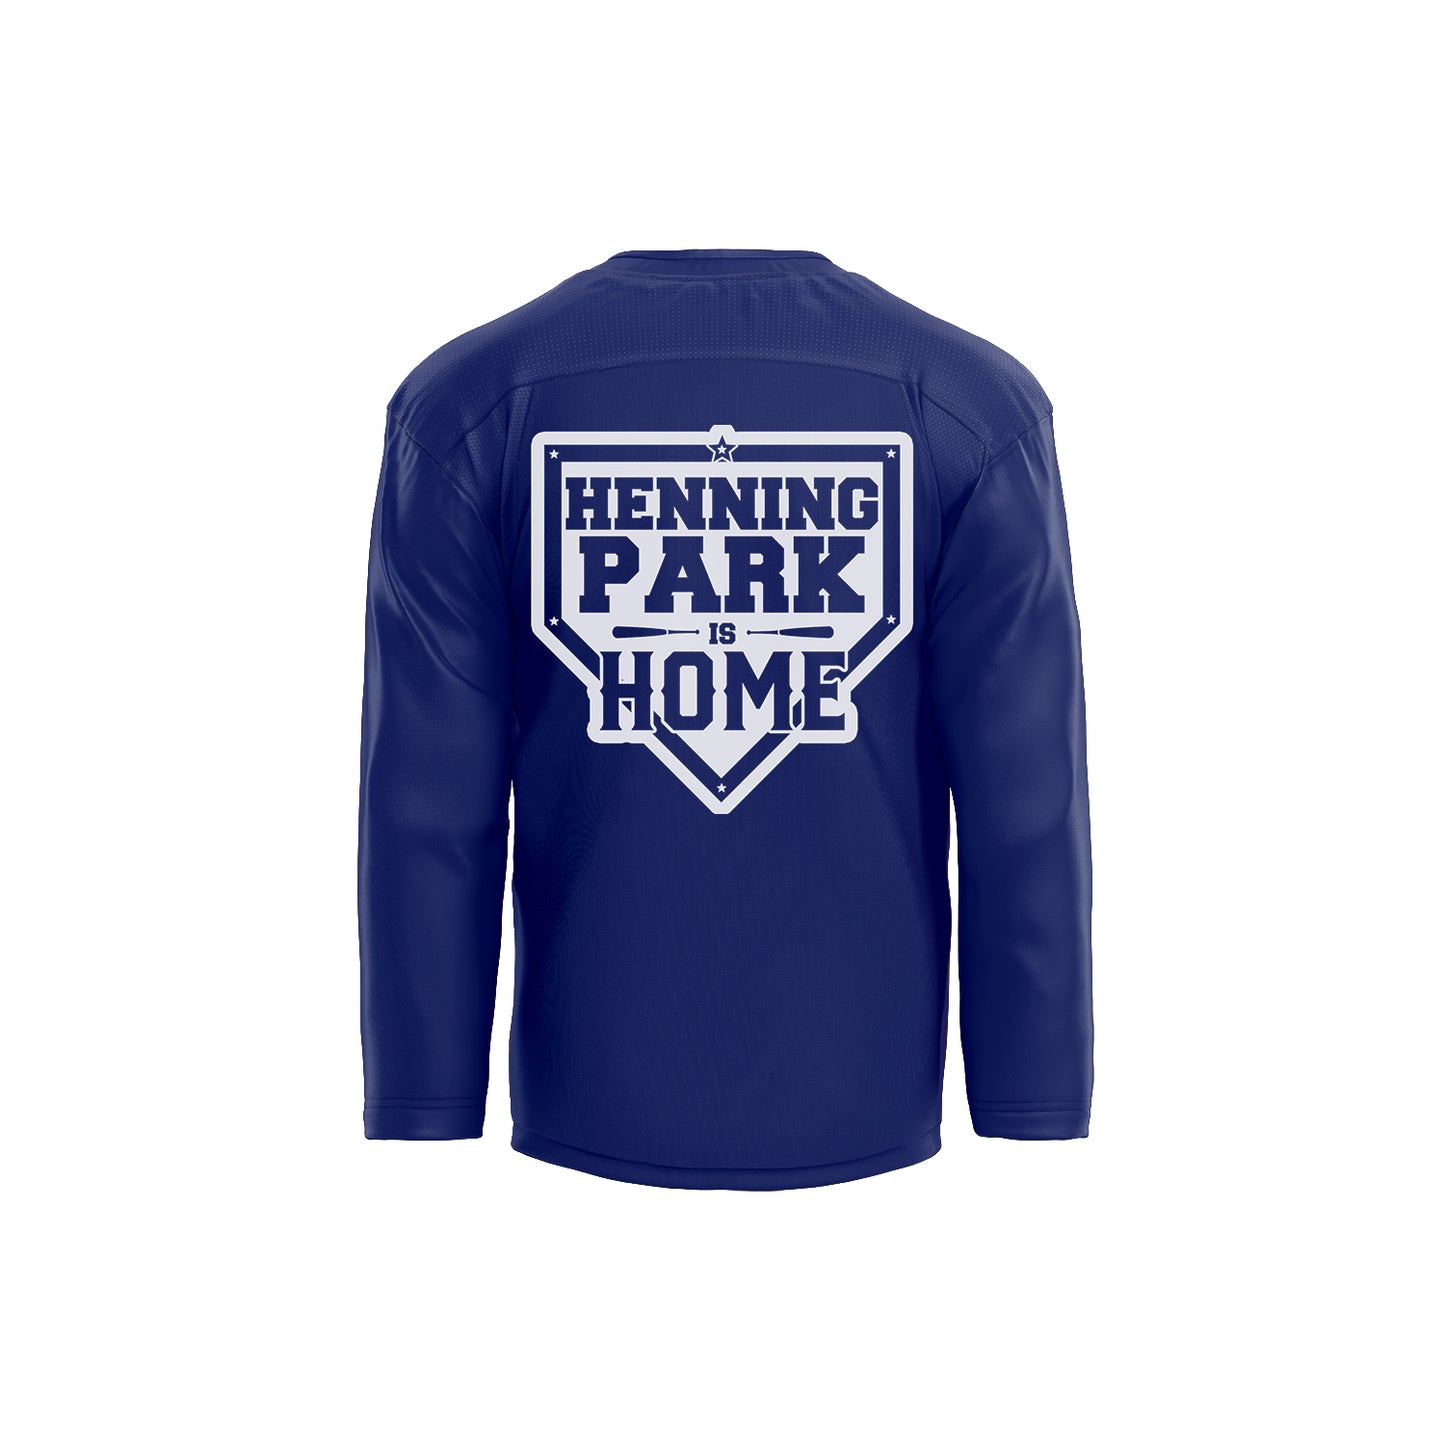 Henning Park Caledonia full zipper batting jacket and custom jerseys for baseball and softball players